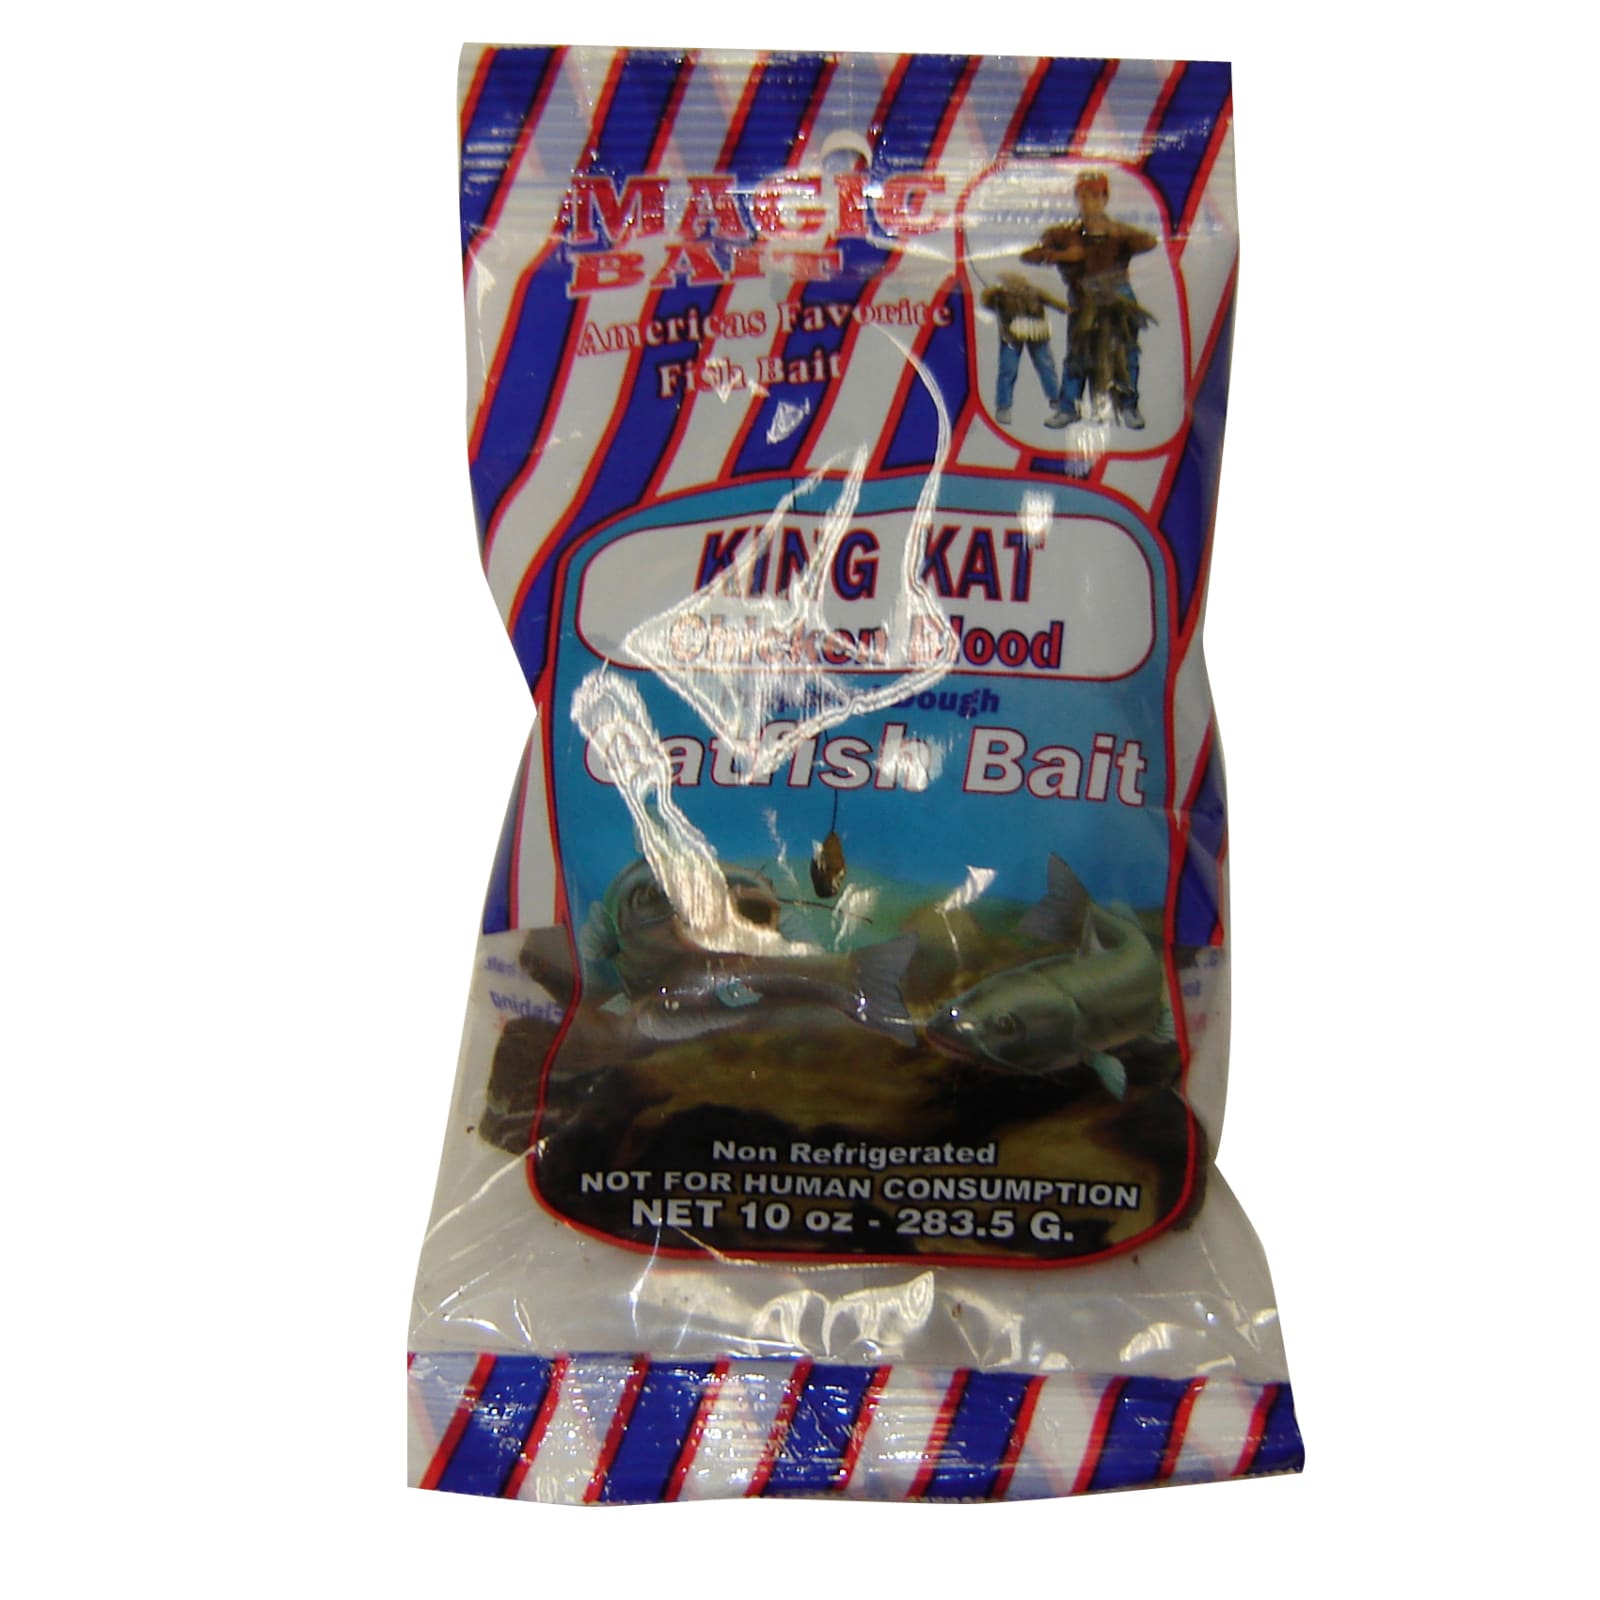 Cubed Catfish Bait - King Kat Chicken Blood by Magic Bait at Fleet Farm